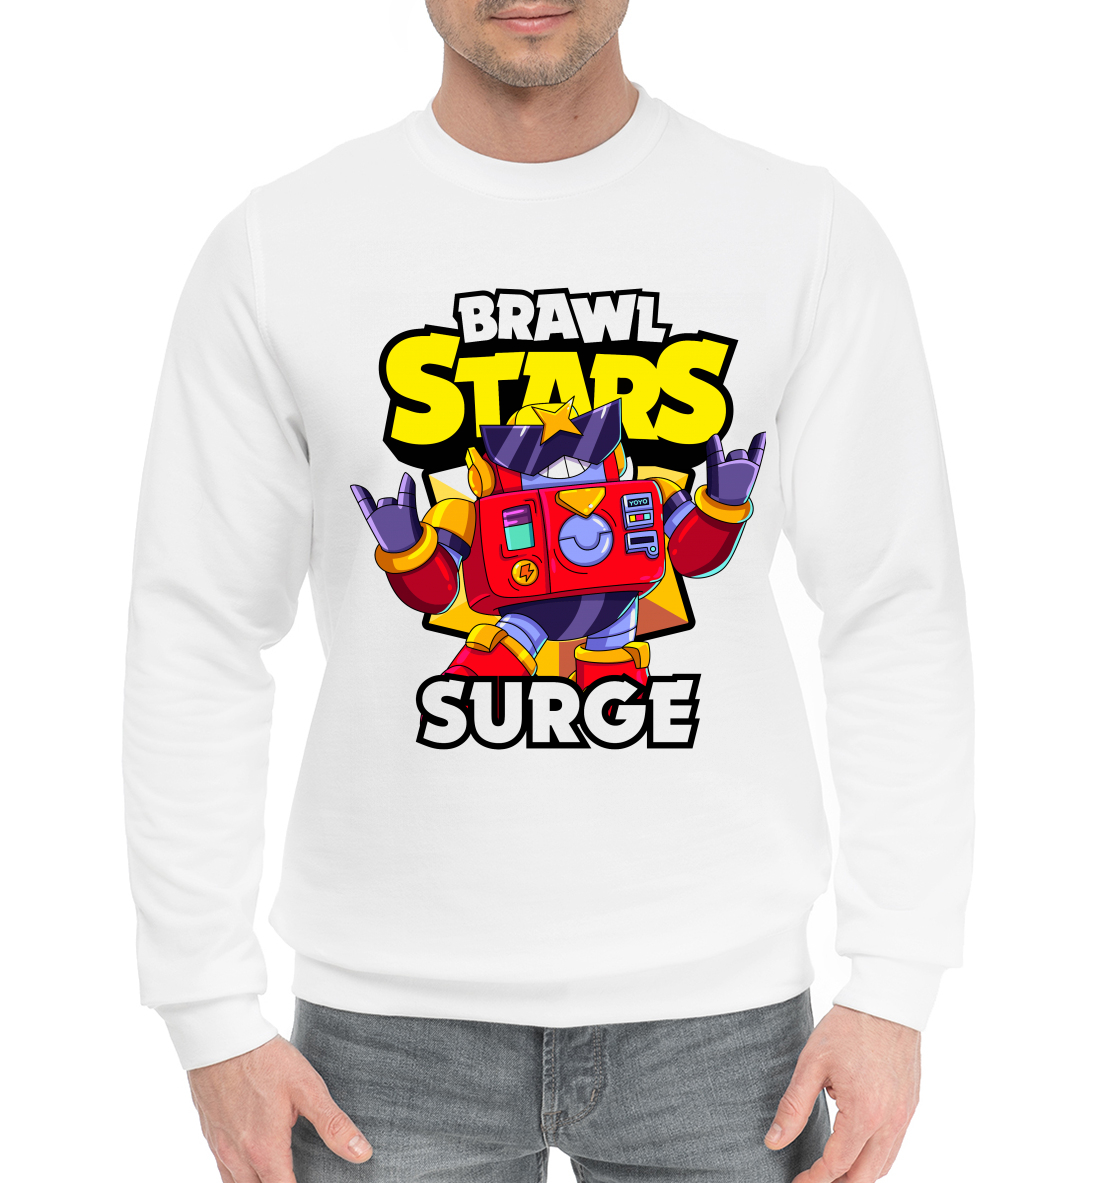 Мужской Хлопковый свитшот с принтом Brawl Stars, Surge, артикул CLH-418828-hsw-2mp